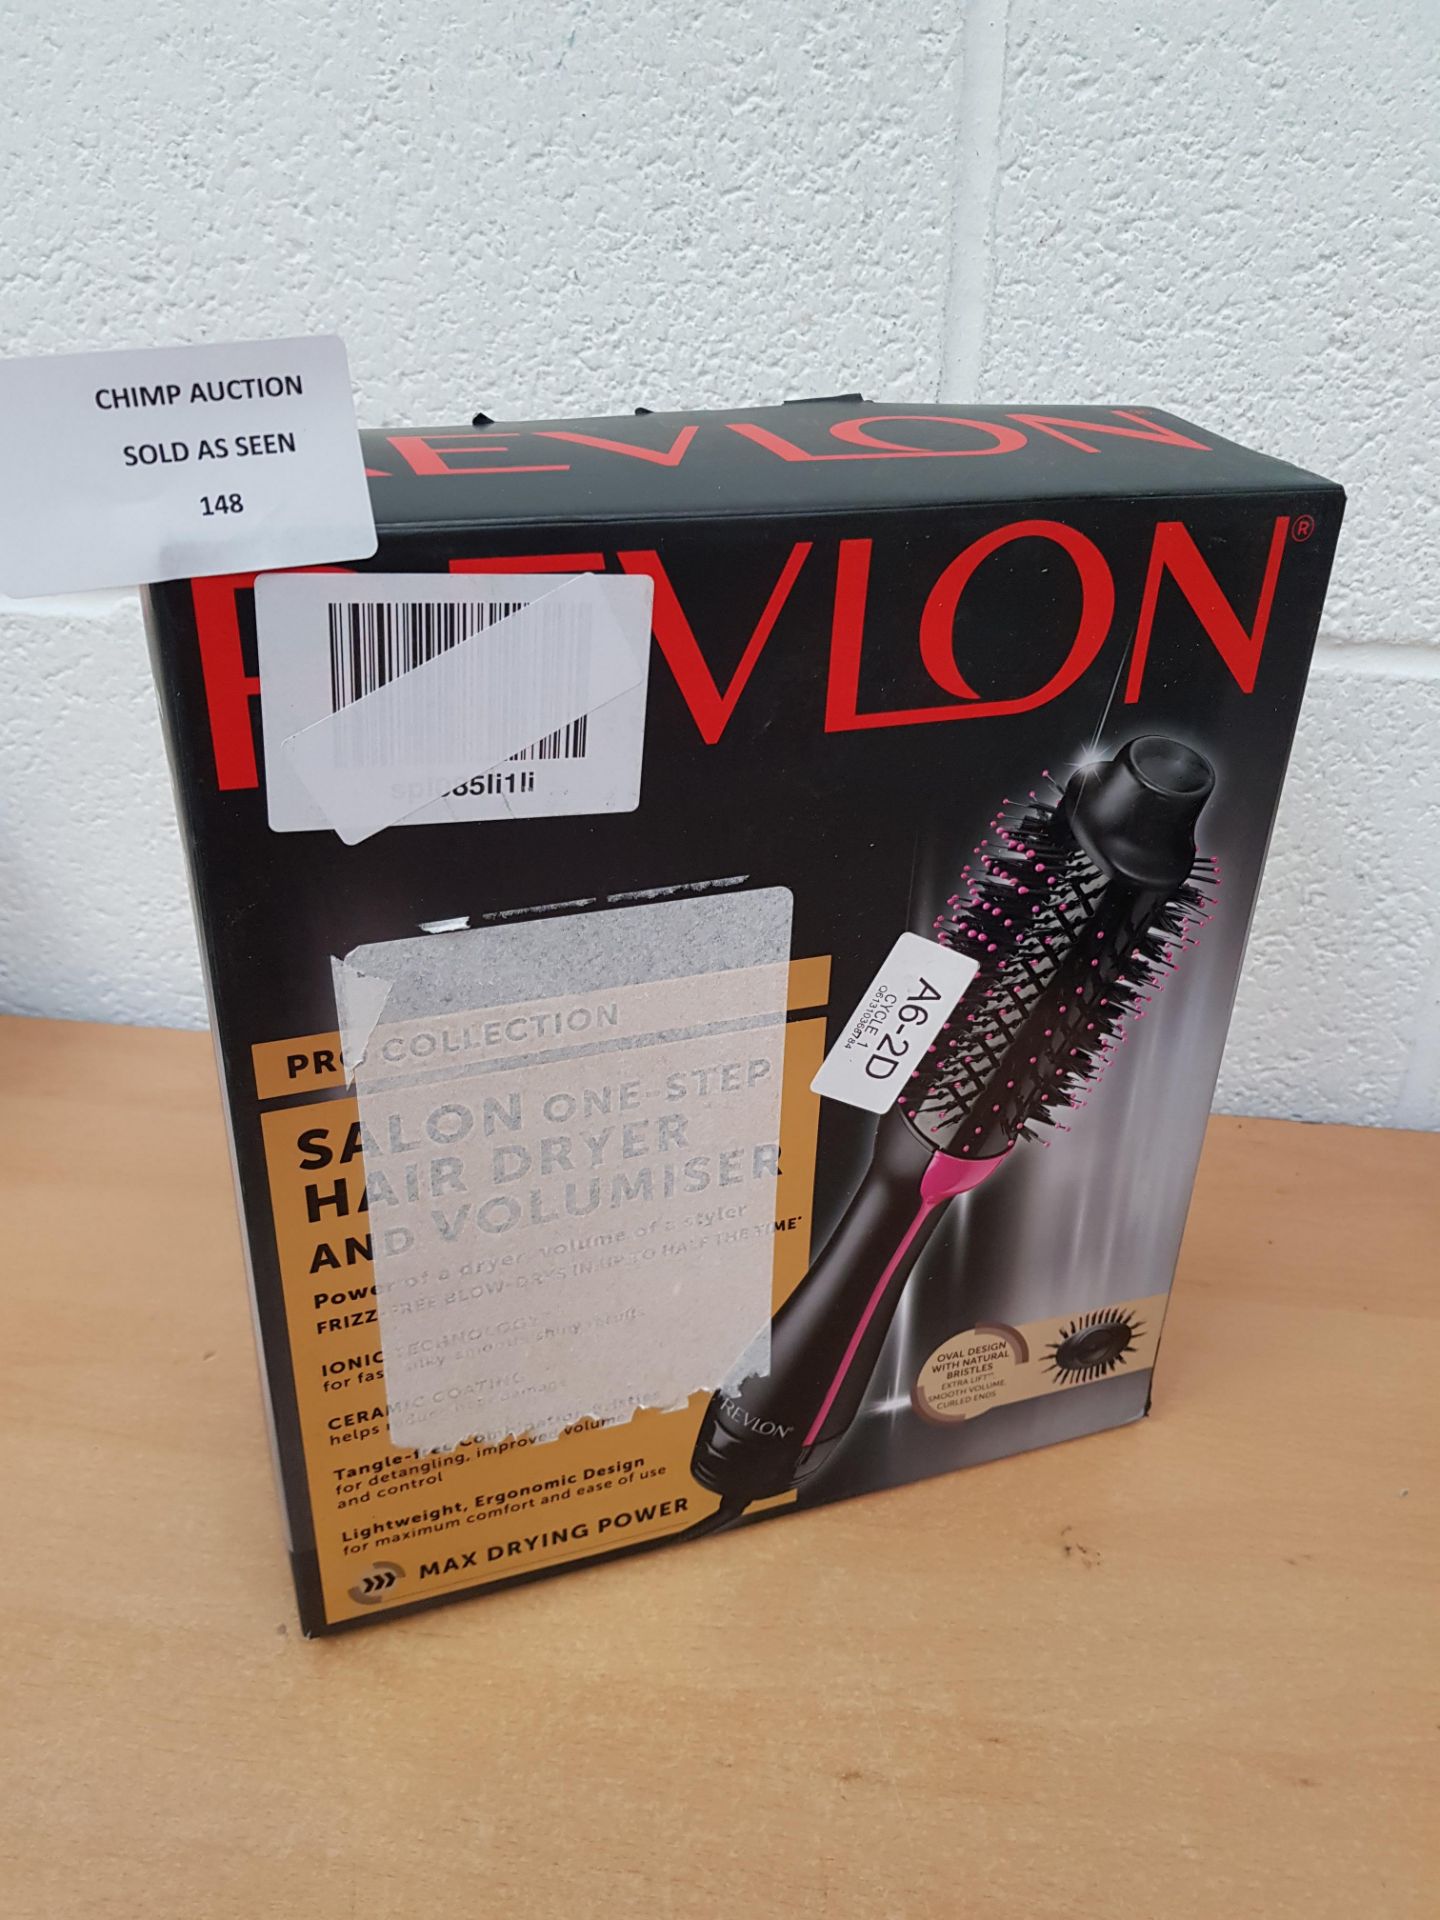 Revlon Pro Collection Salon One-Step Hair Dryer & Volumiser RRP £129.99.